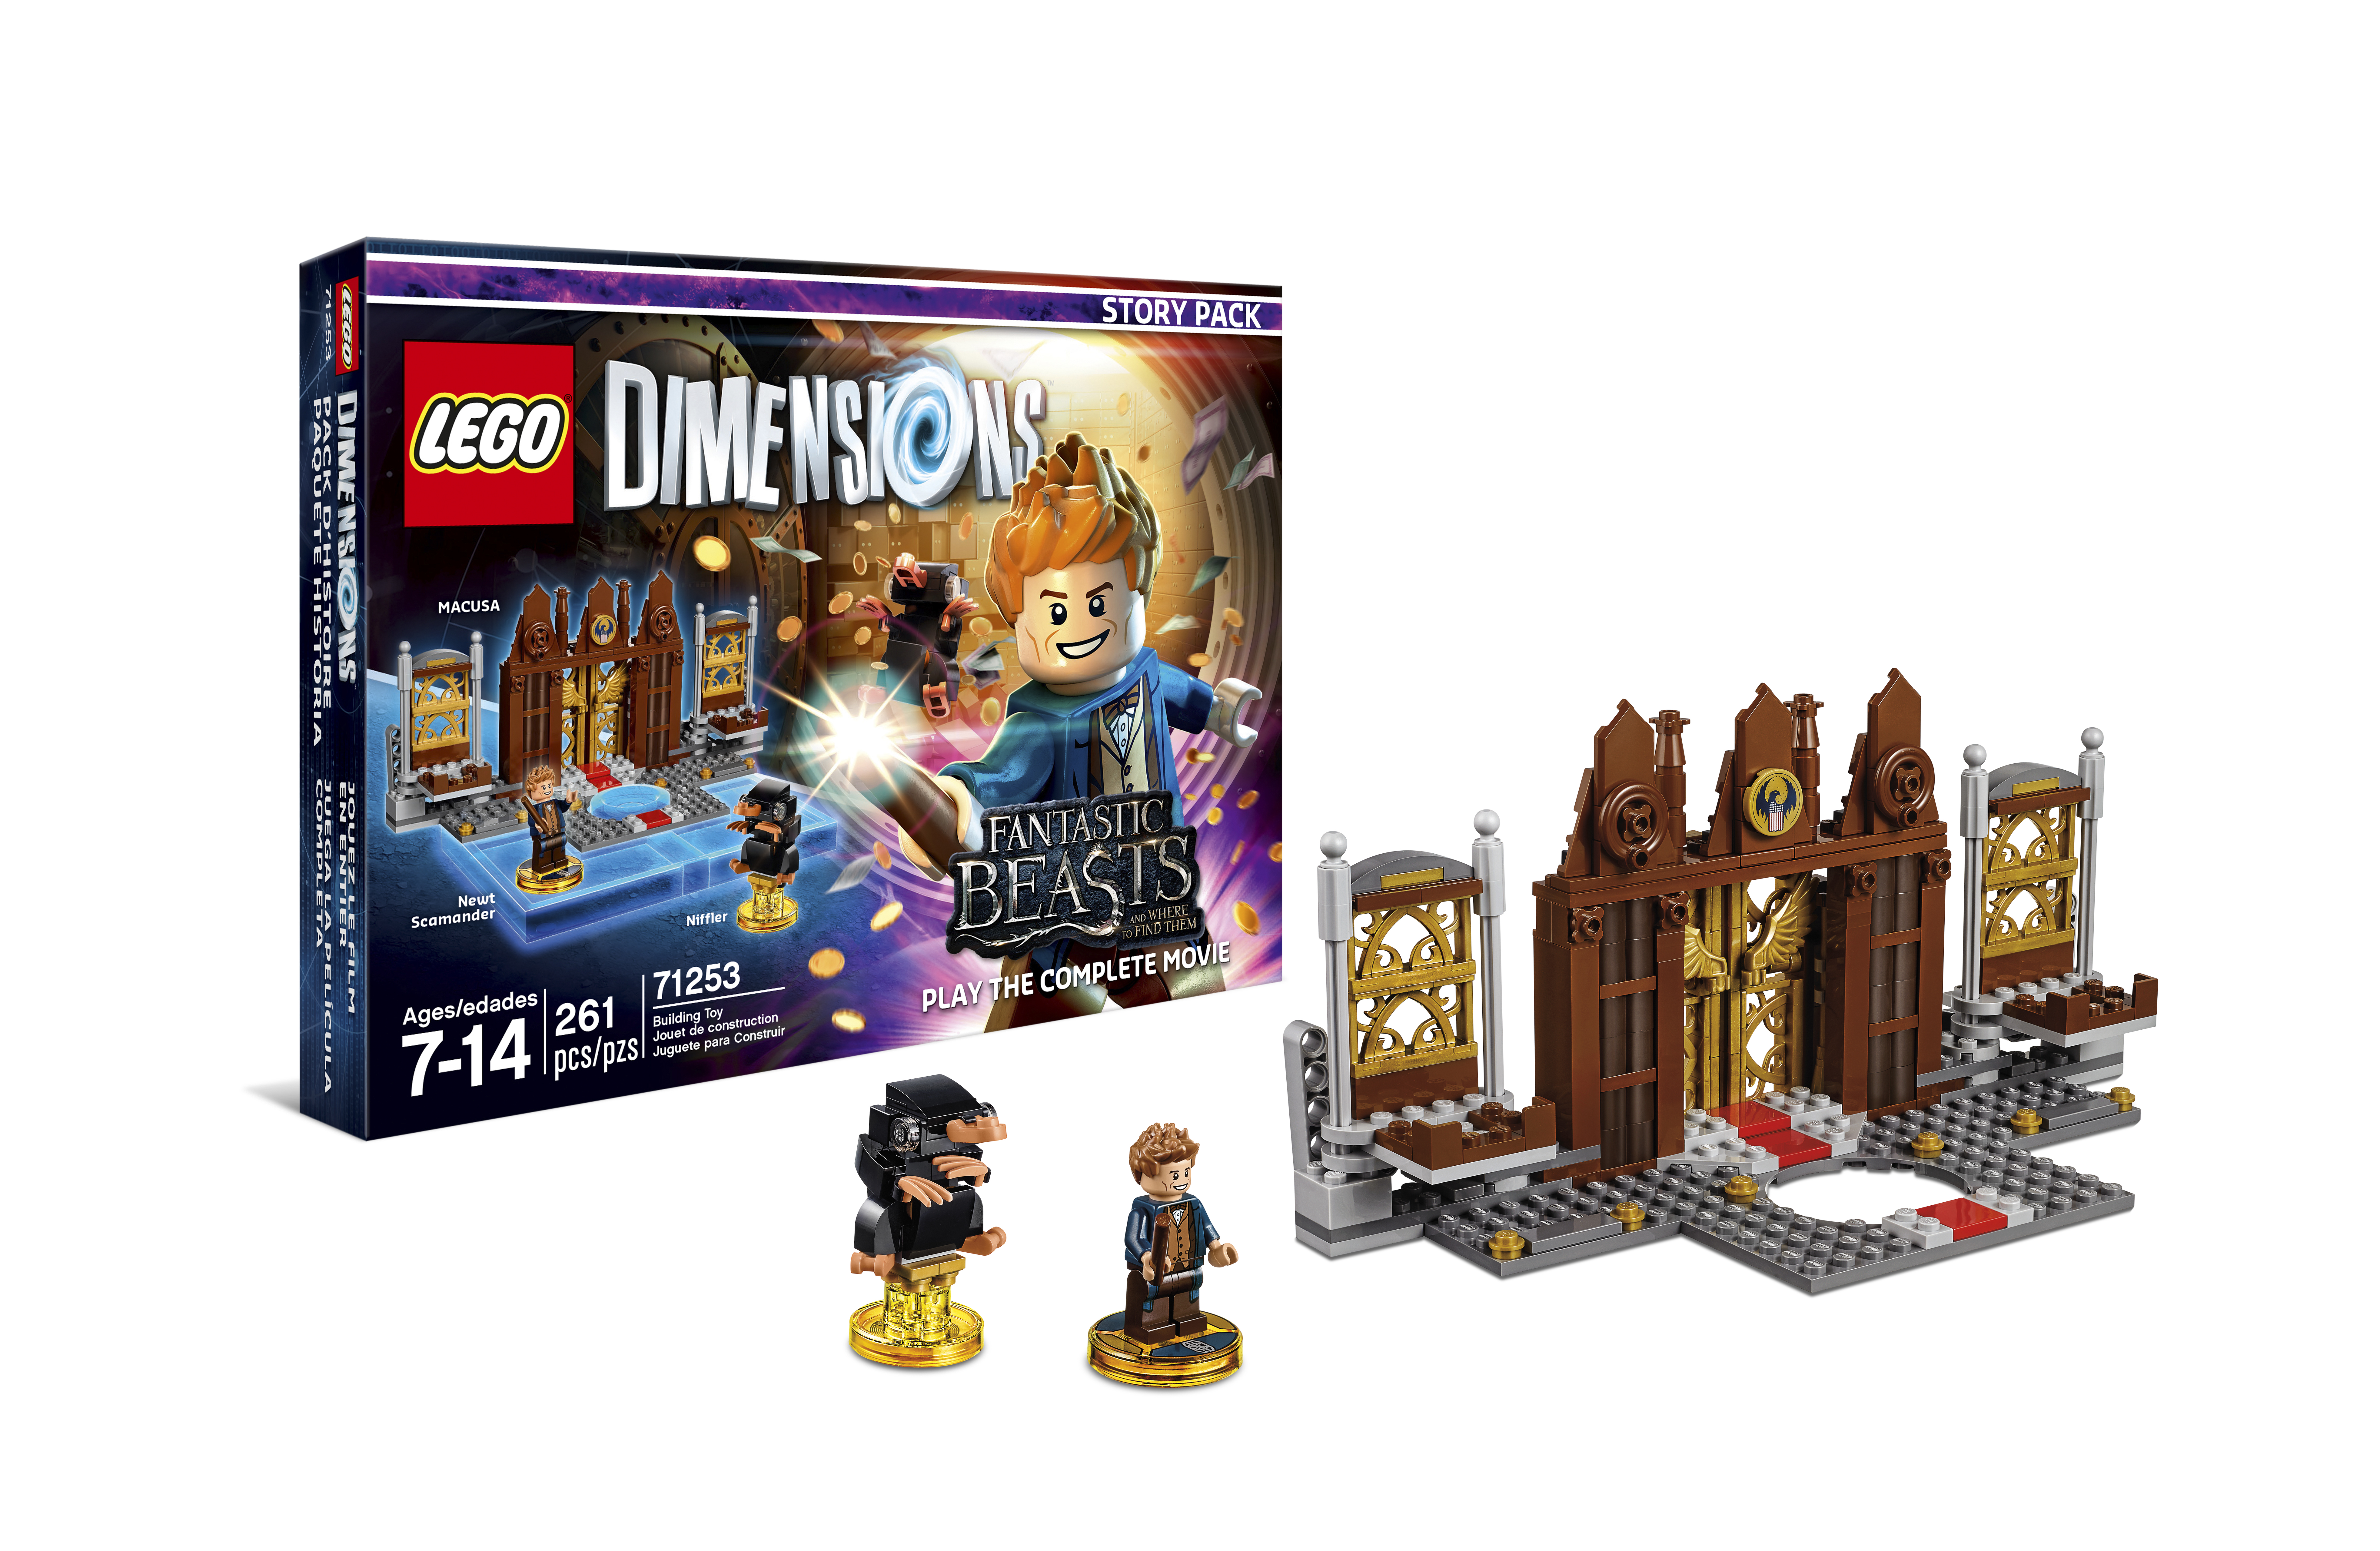 lego dimensions lego city undercover